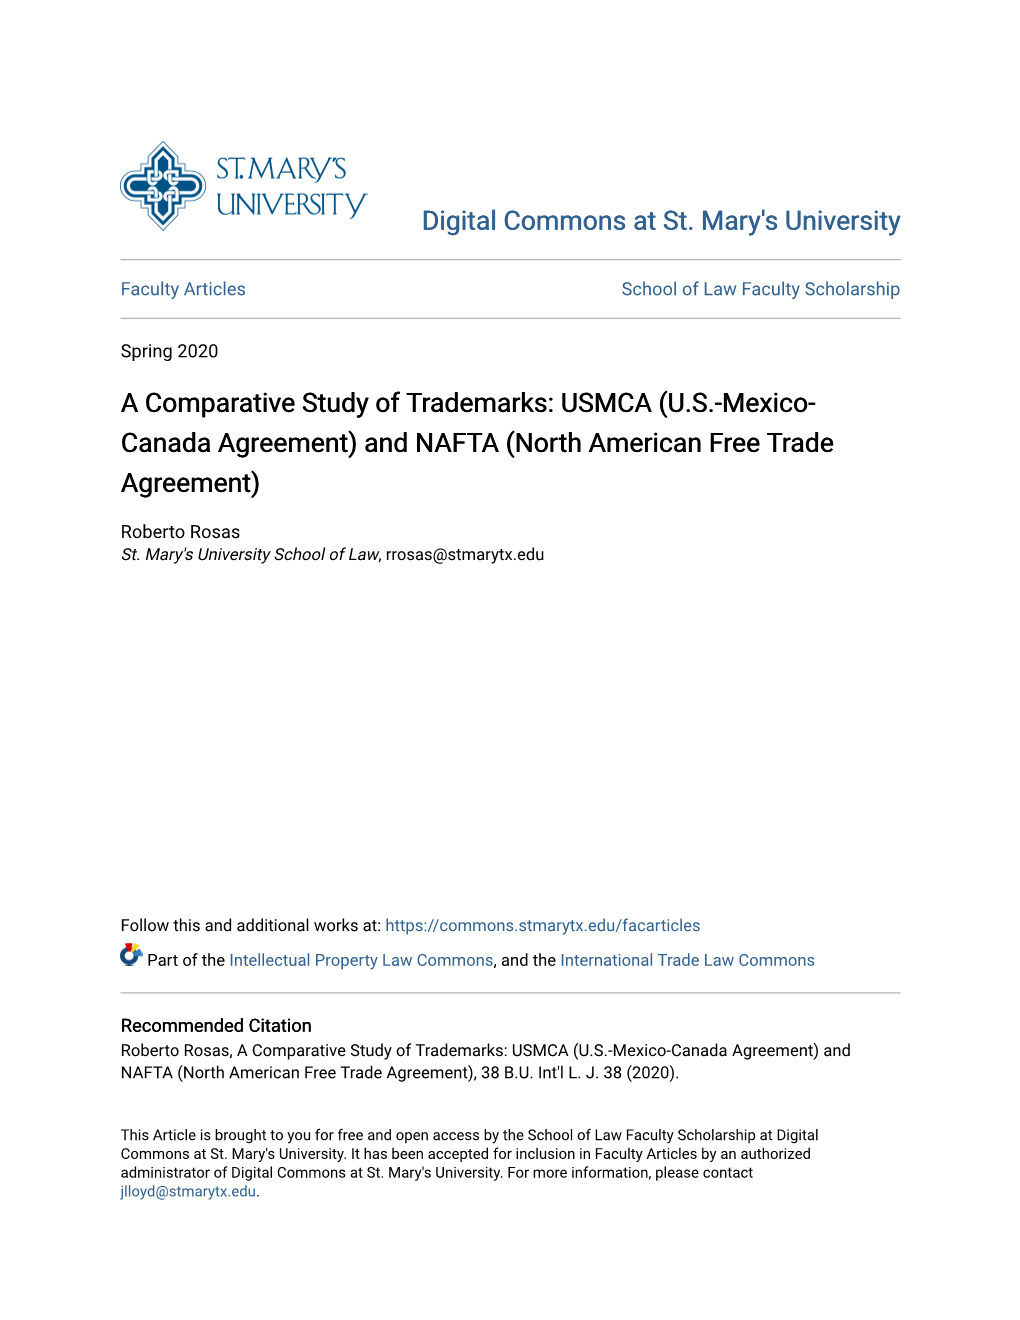 A Comparative Study of Trademarks: USMCA (U.S.-Mexico-Canada Agreement) and NAFTA (North American Free Trade Agreement), 38 B.U